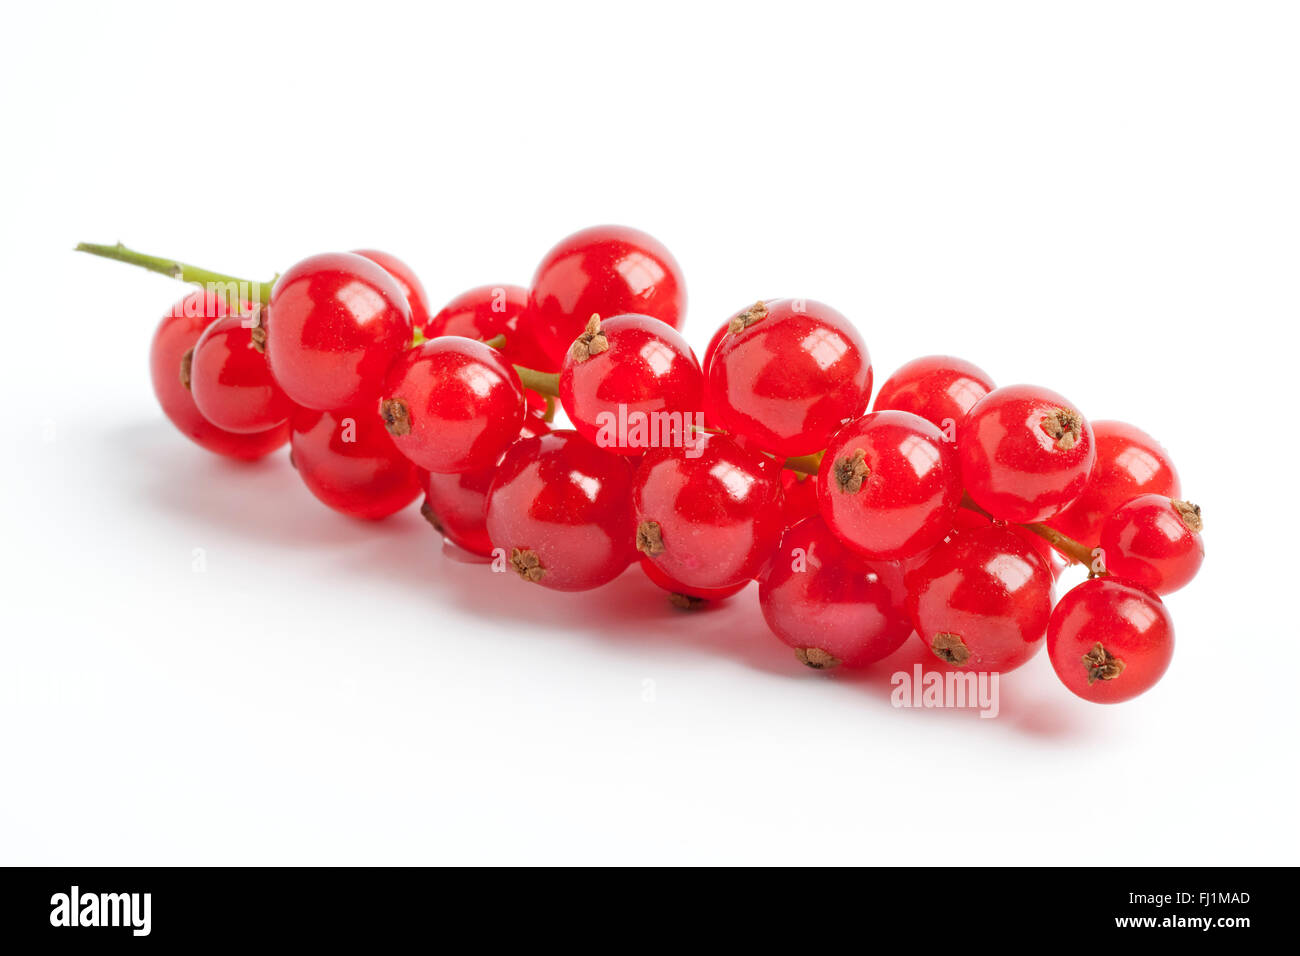 Ramita de frescos frutos rojos sobre fondo blanco. Foto de stock